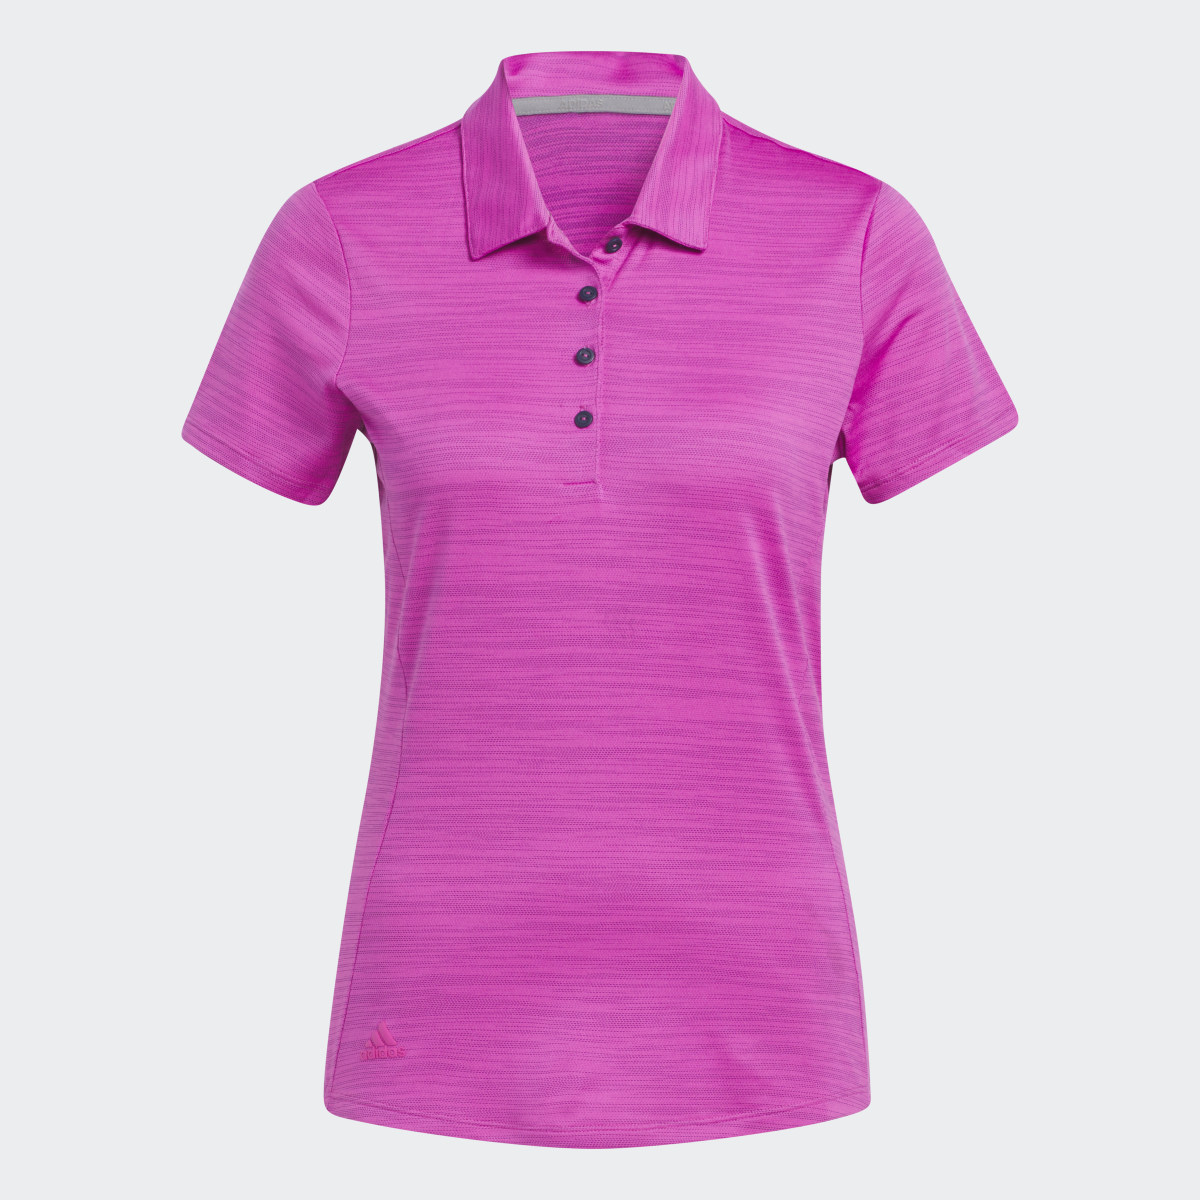 Adidas Space-Dyed Short Sleeve Polo Shirt. 5